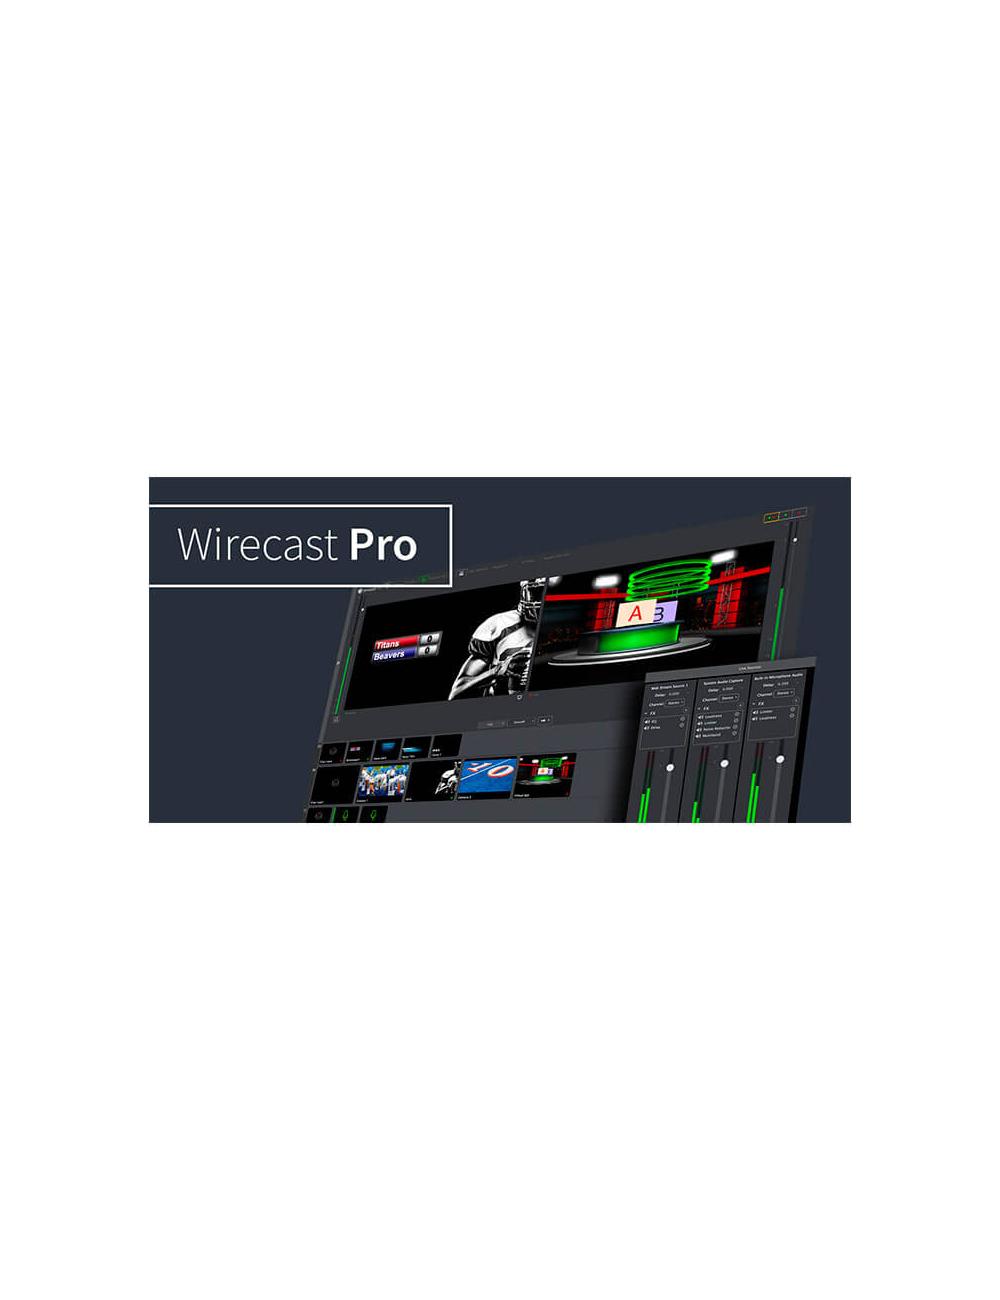 Wirecast Pro instaling